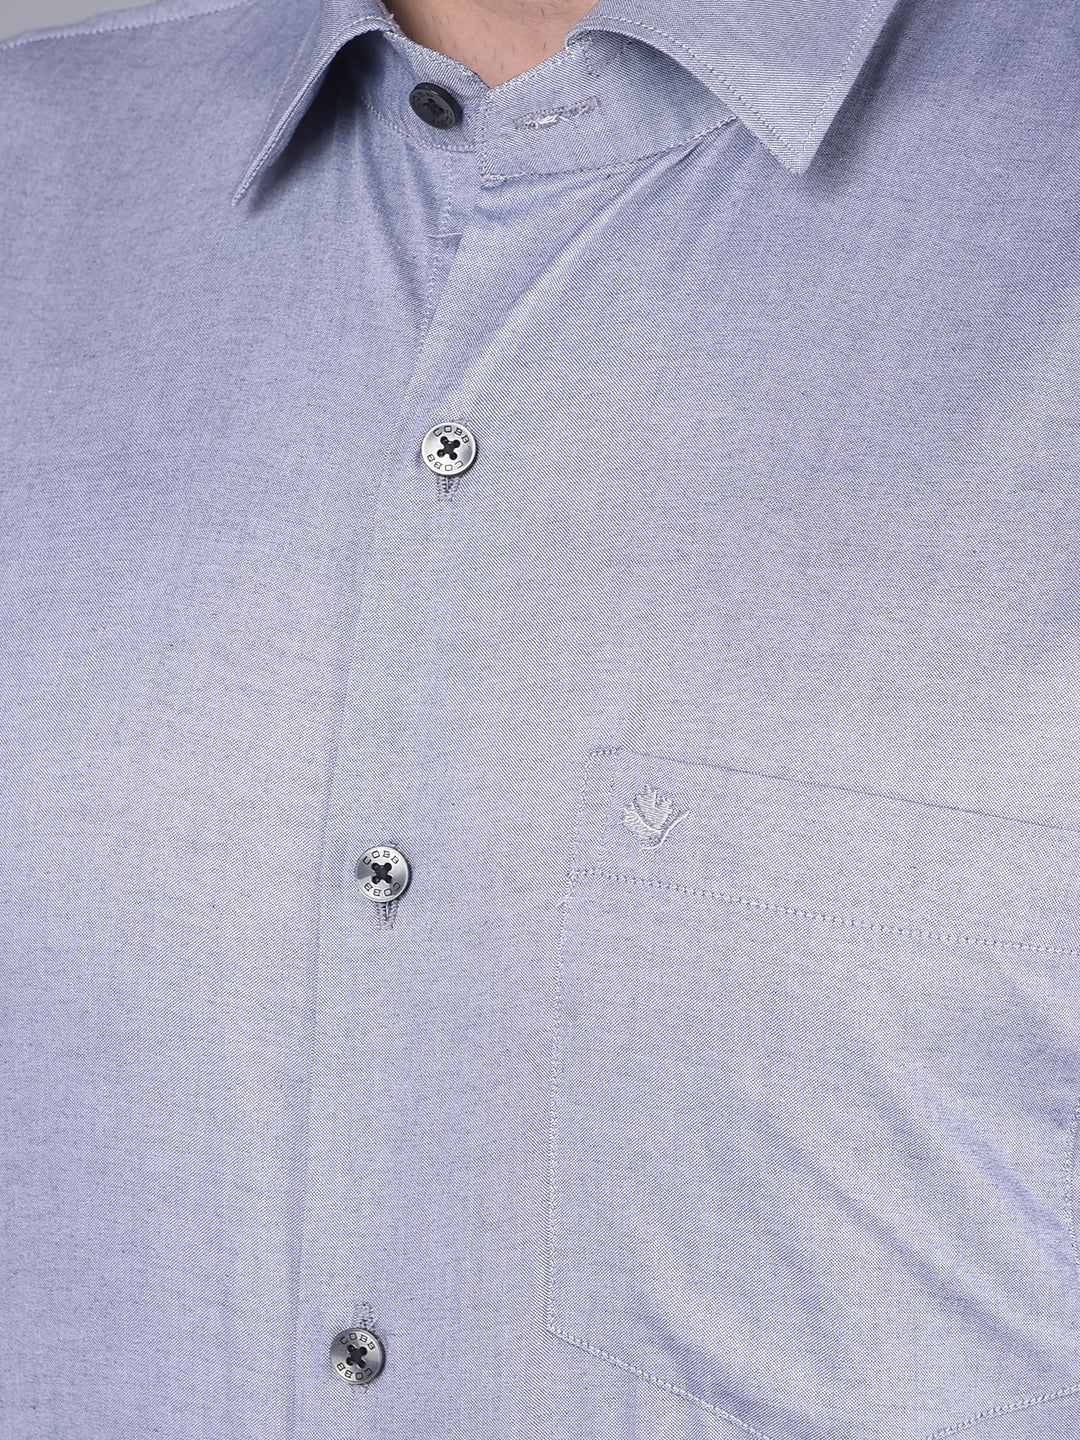 Cobb Solid Grey Smart Fit Formal Shirt